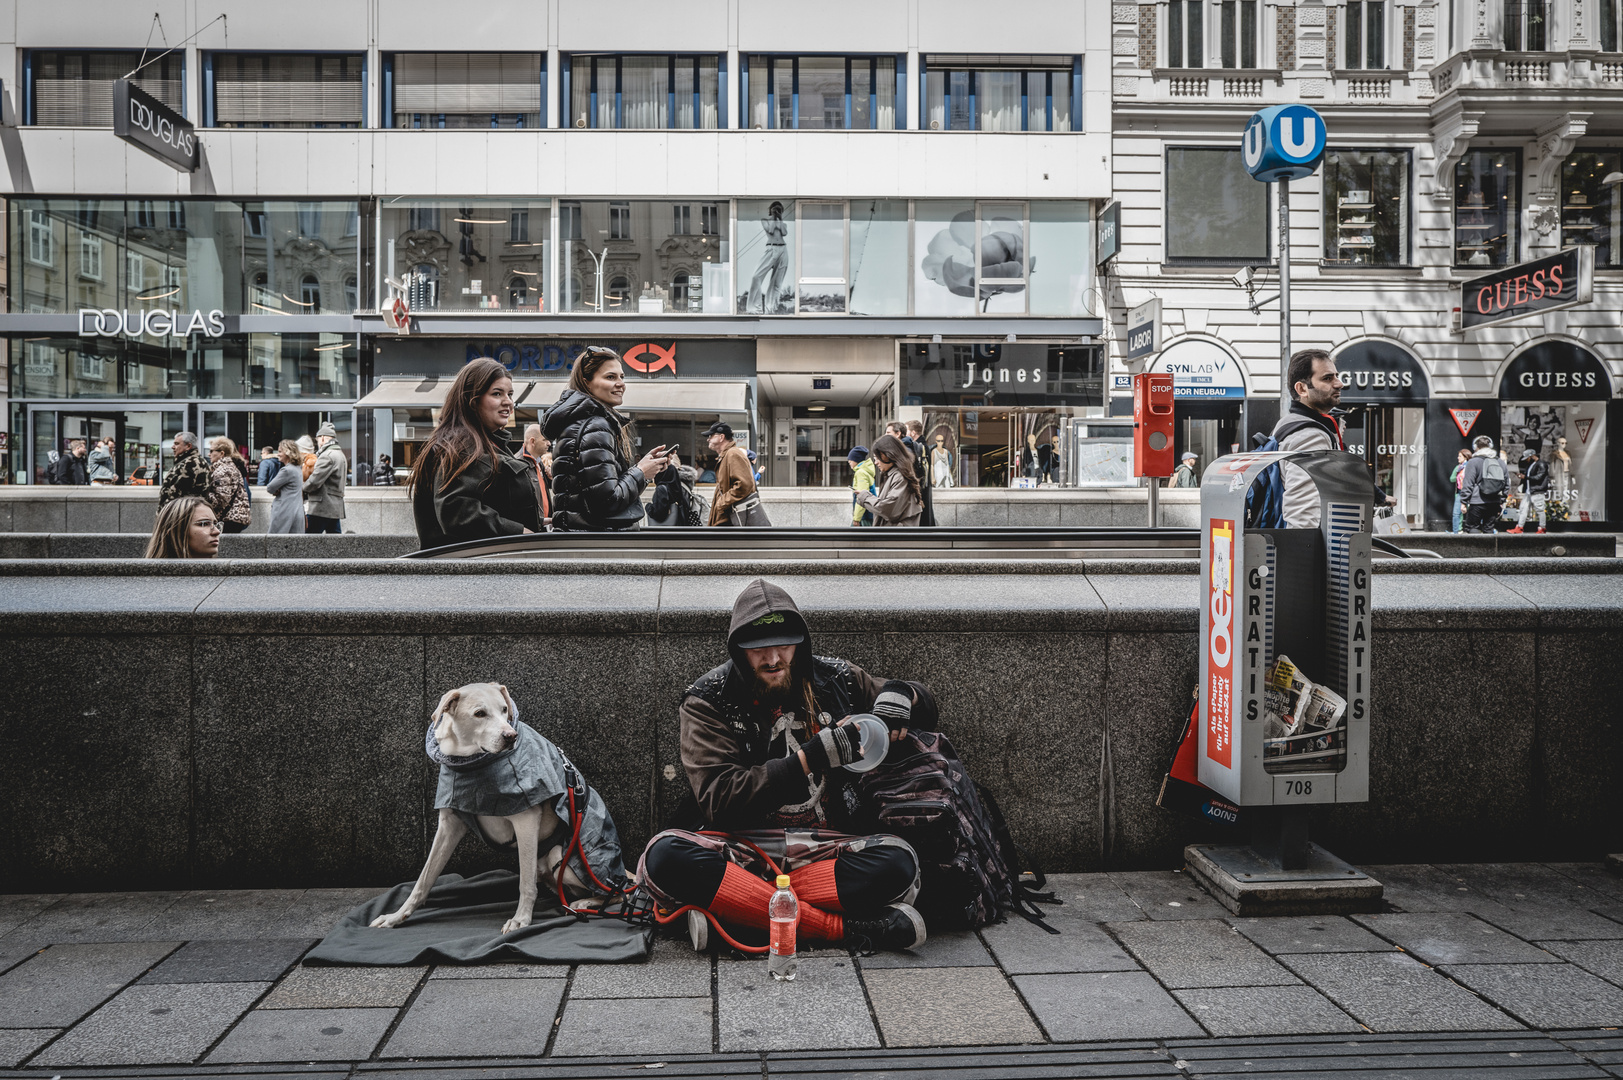 Streetfotograpie Wien 1